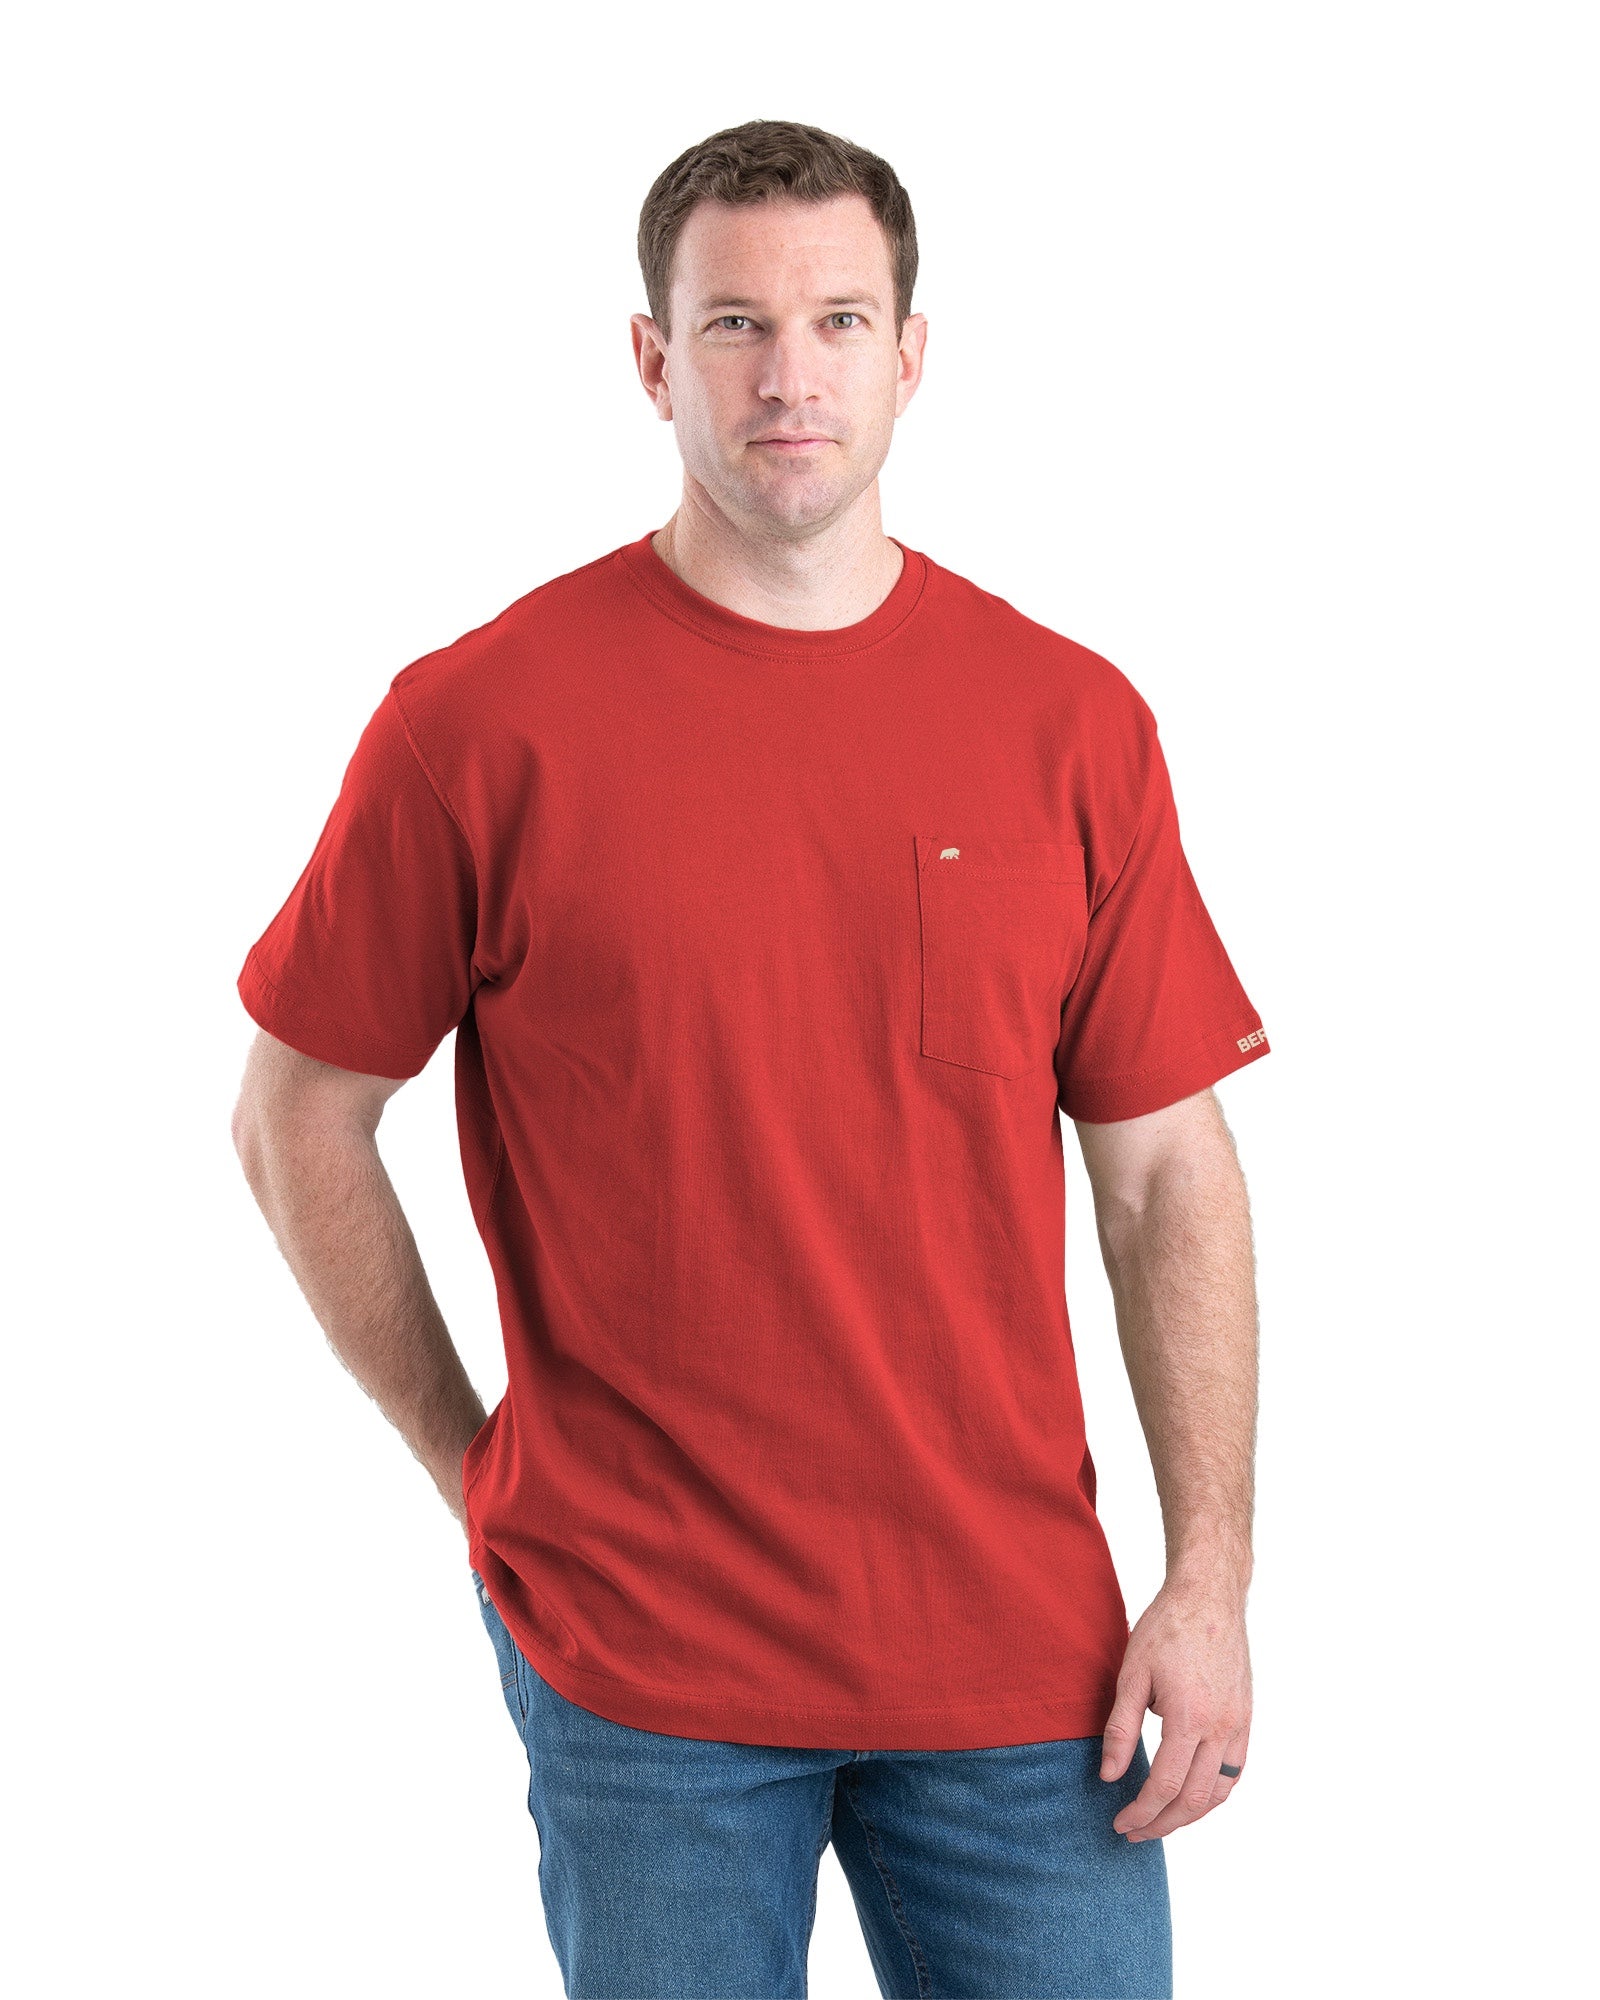 Men's Standard 4xl Tall Shirts & Tees